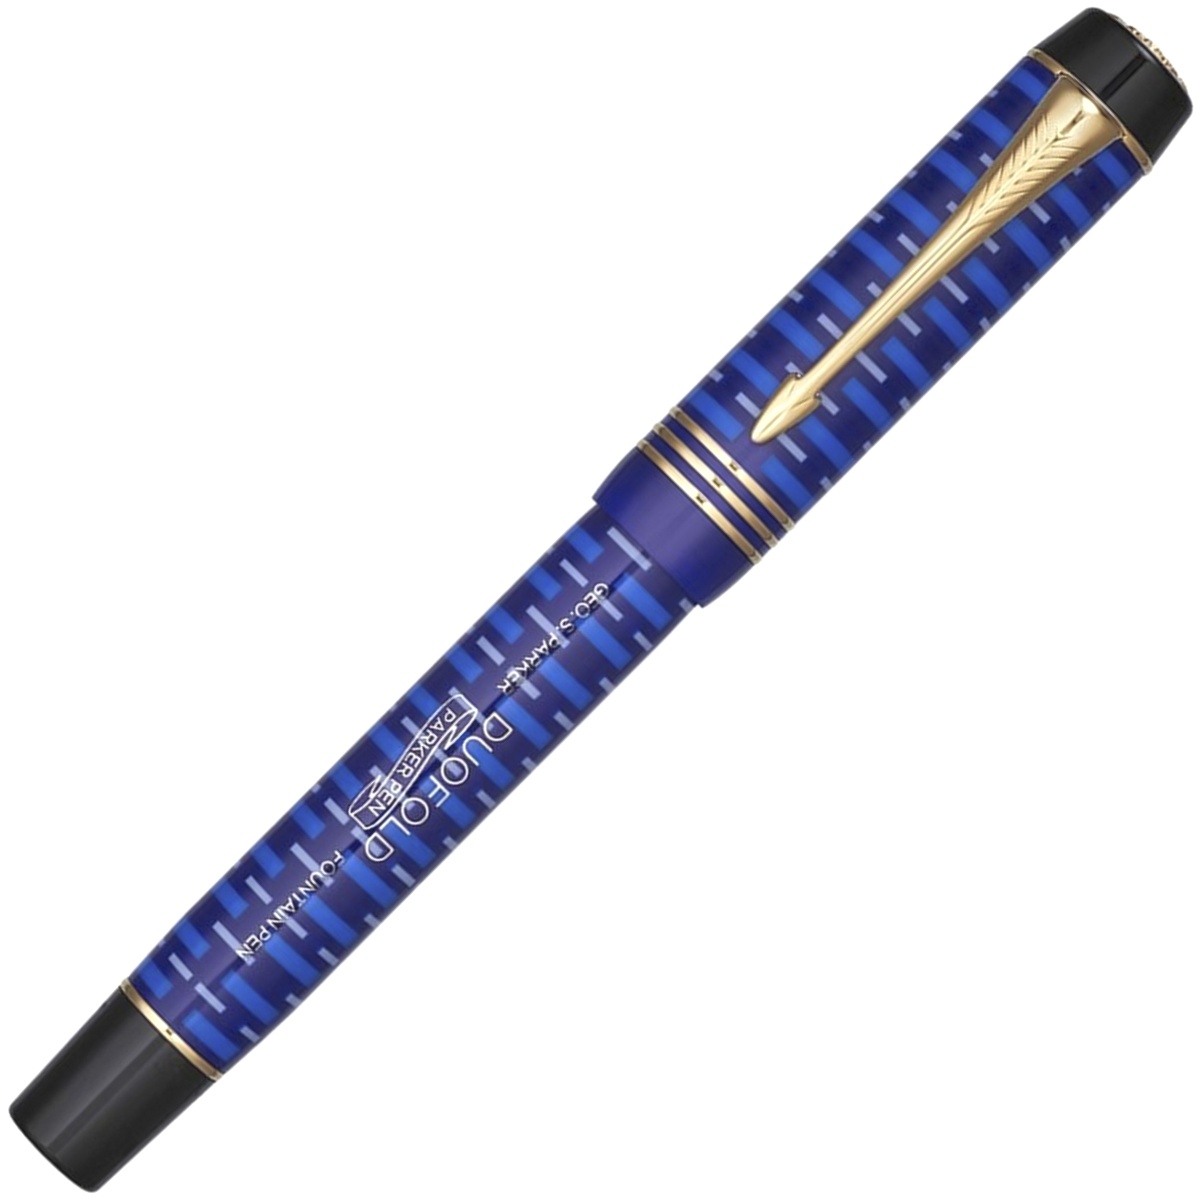  Перьевая ручка Parker Duofold 100th Anniversary LE, Lapis Lazuli Blue GT (Перо F), фото 2